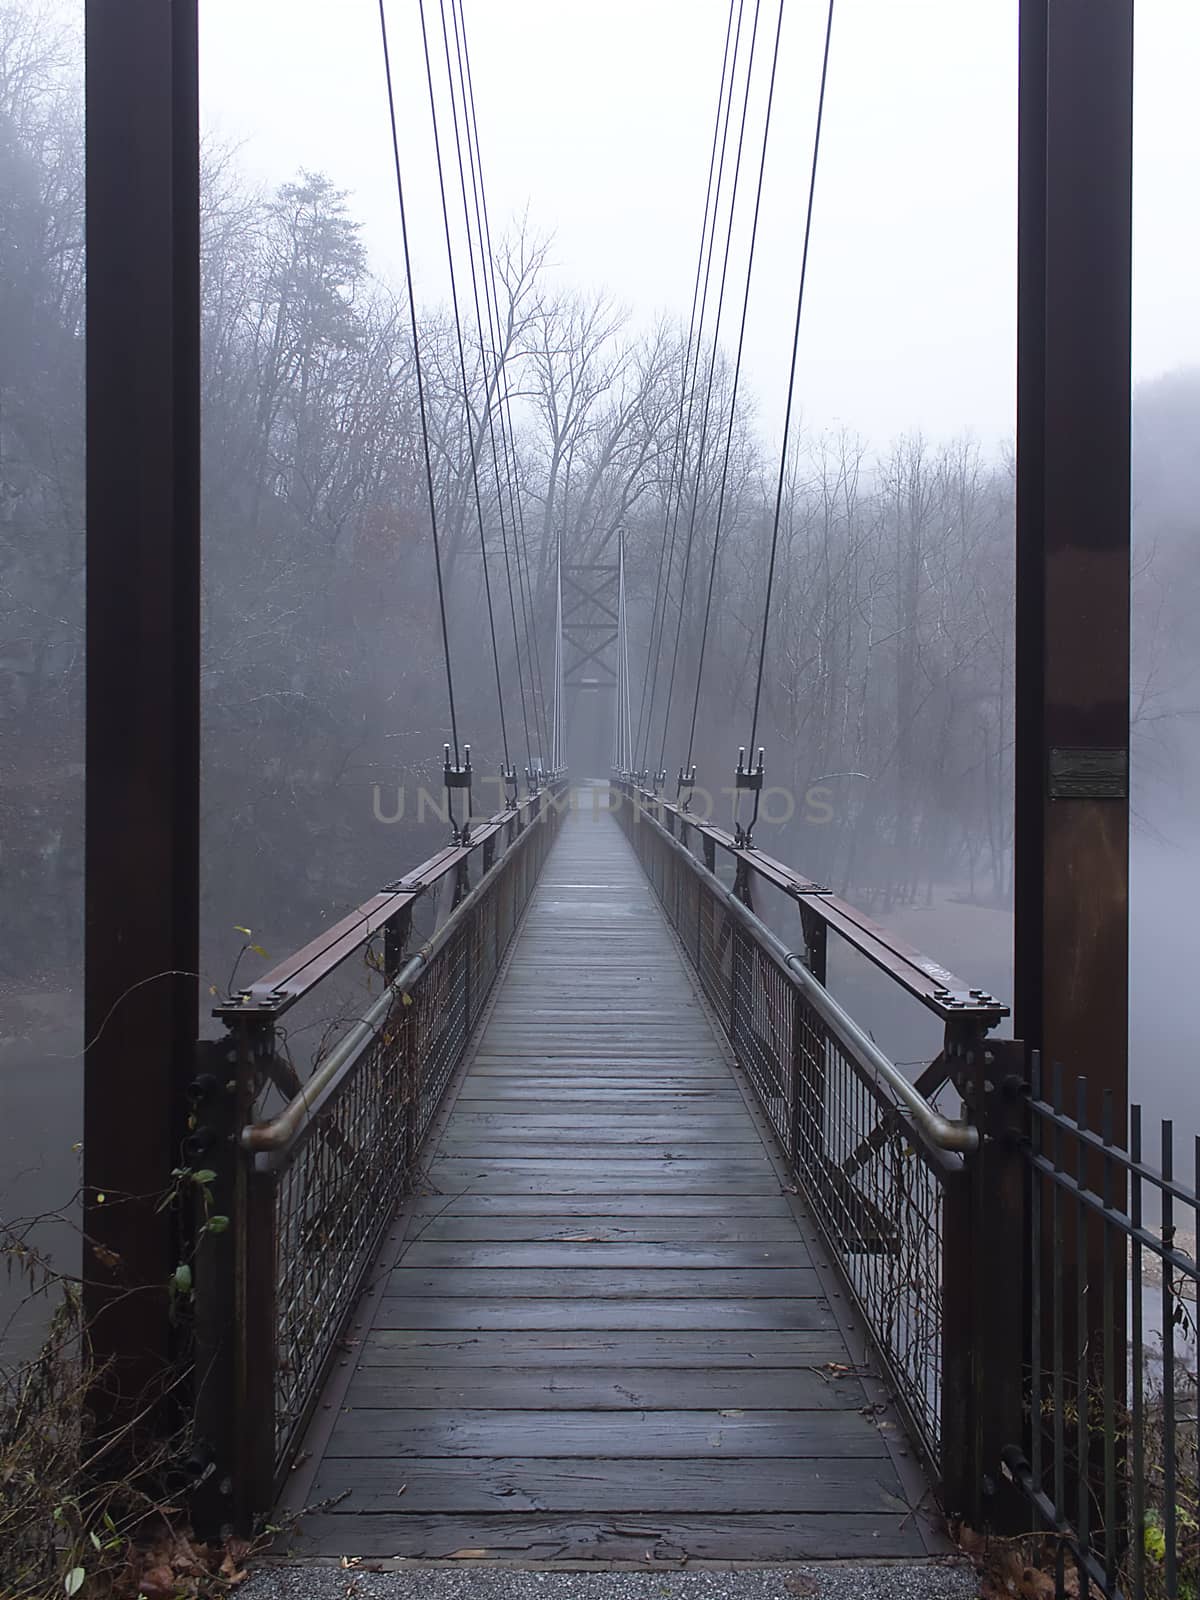 Pedestrian suspension bridge over river by CharlieFloyd